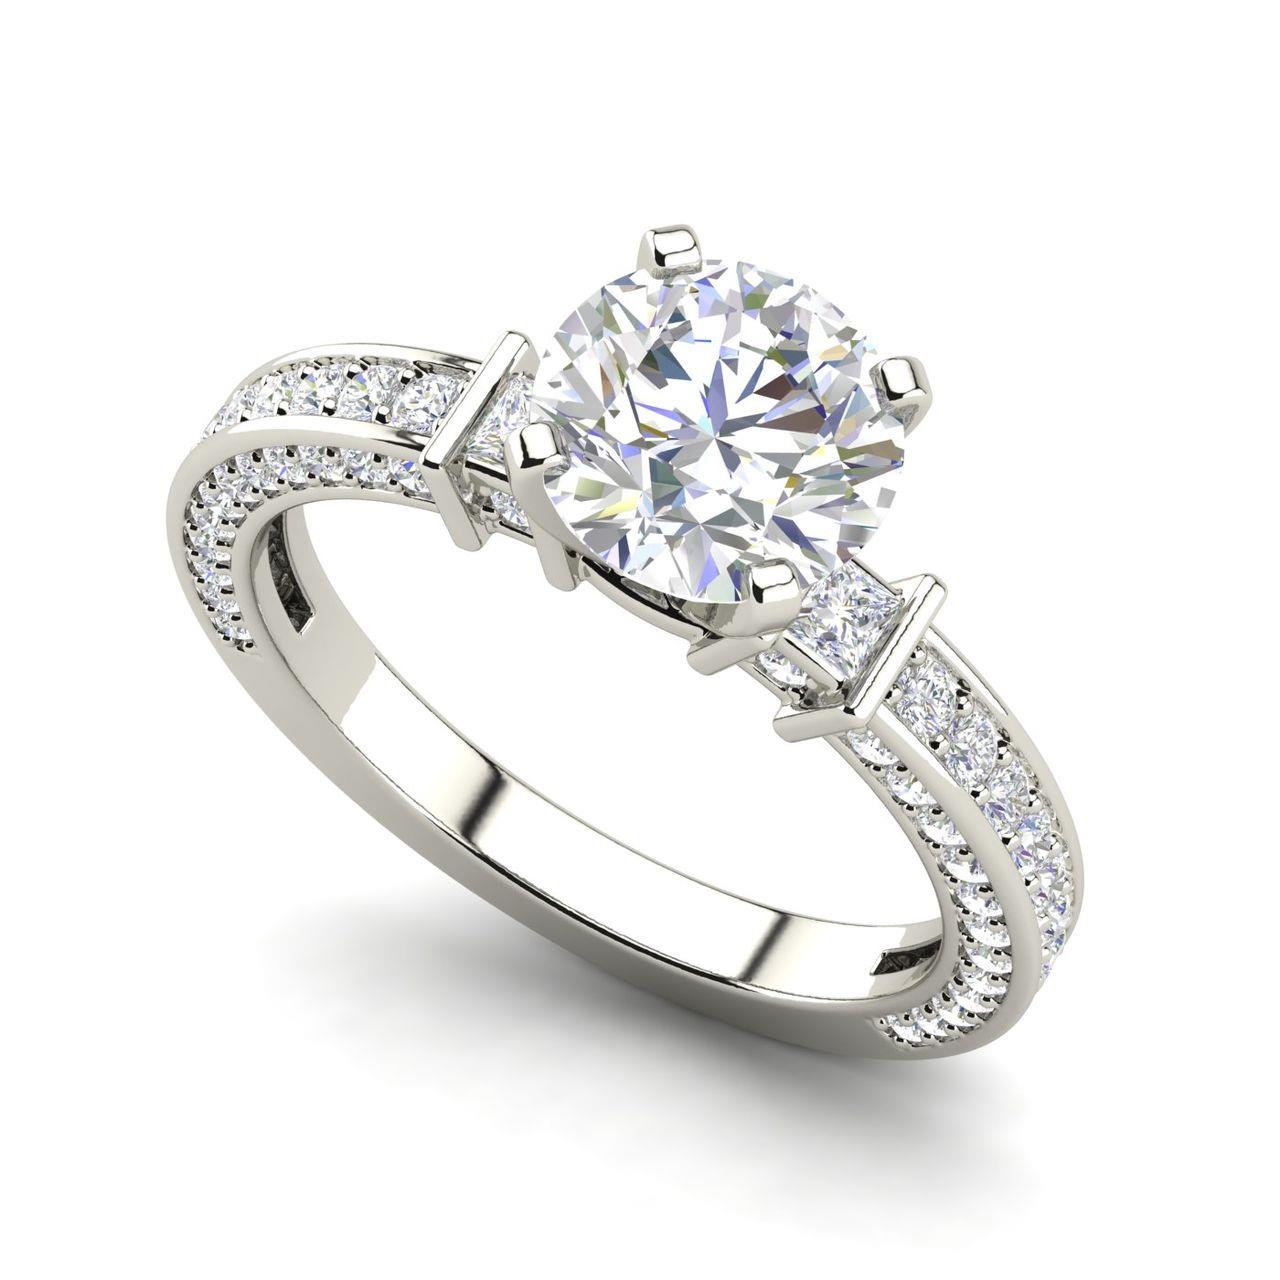 Three Sided Pave 1.35 Carat Round Cut Diamond Engagement Ring